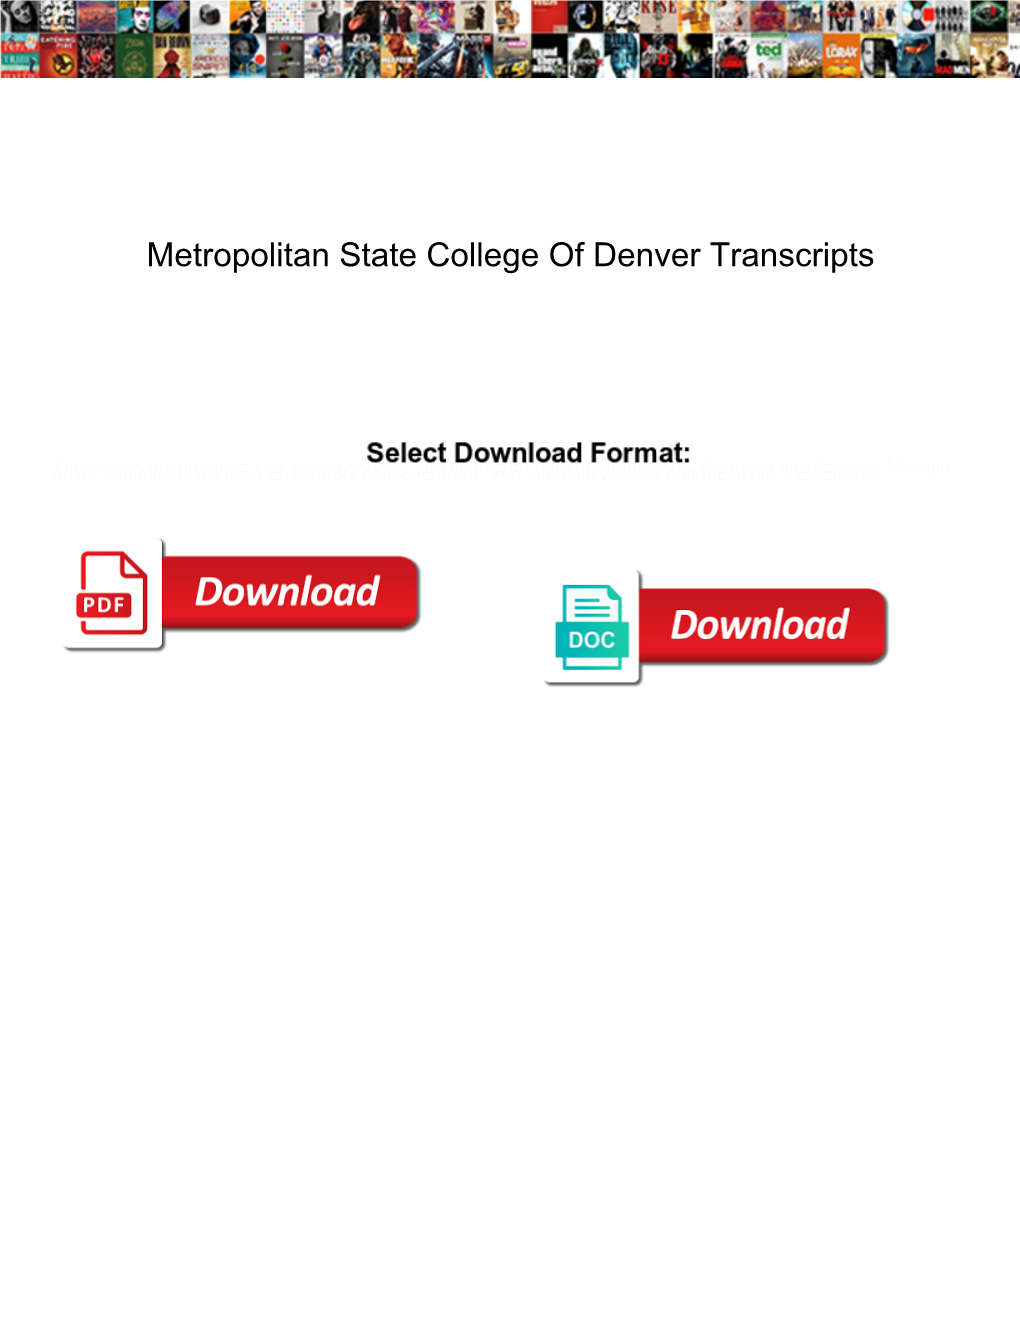 Metropolitan State College of Denver Transcripts